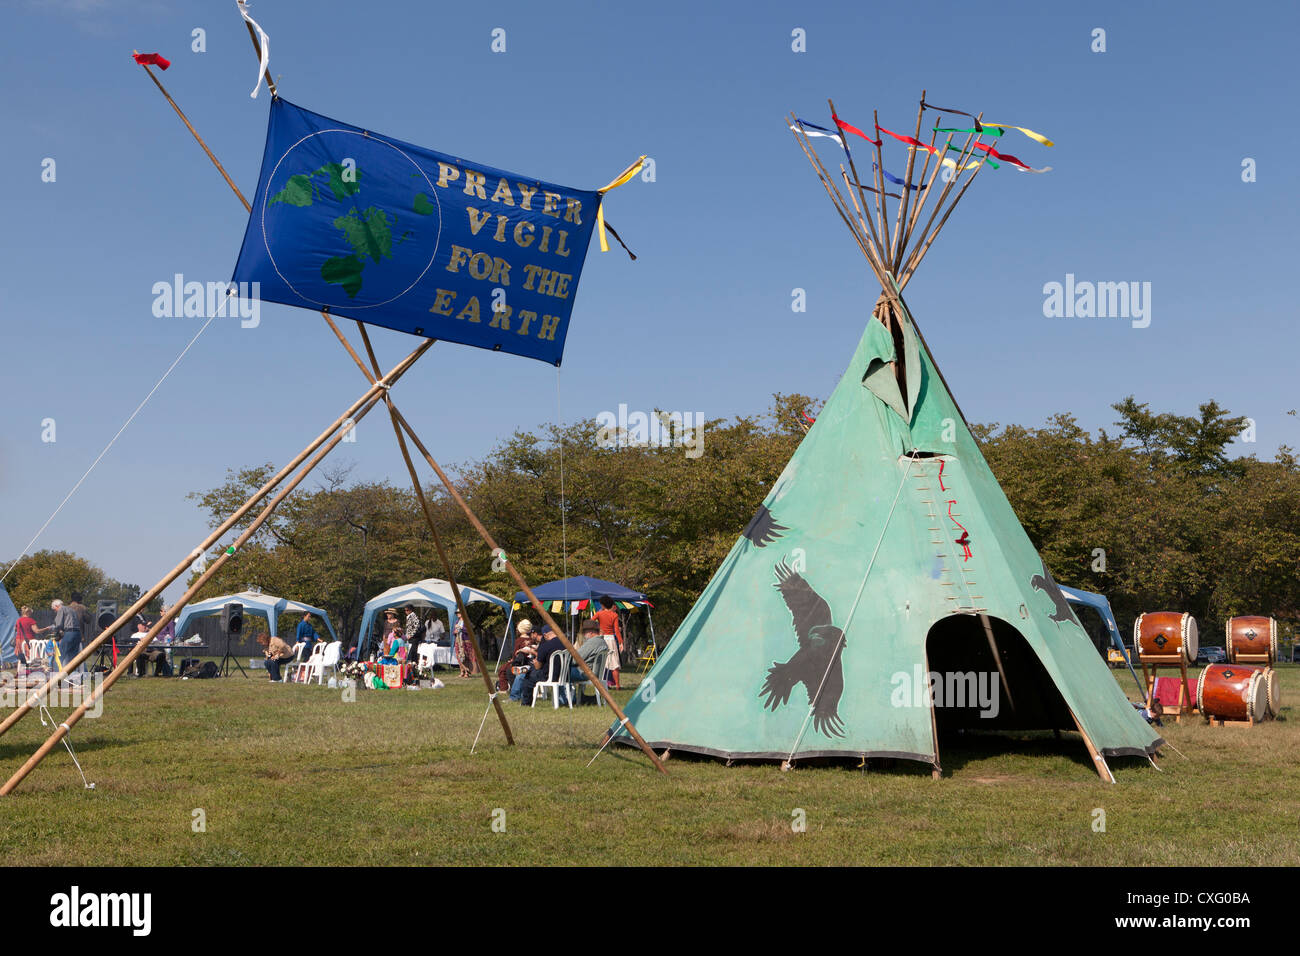 A tepee tent at prayer vigil for the earth - Washington, DC Stock Photo